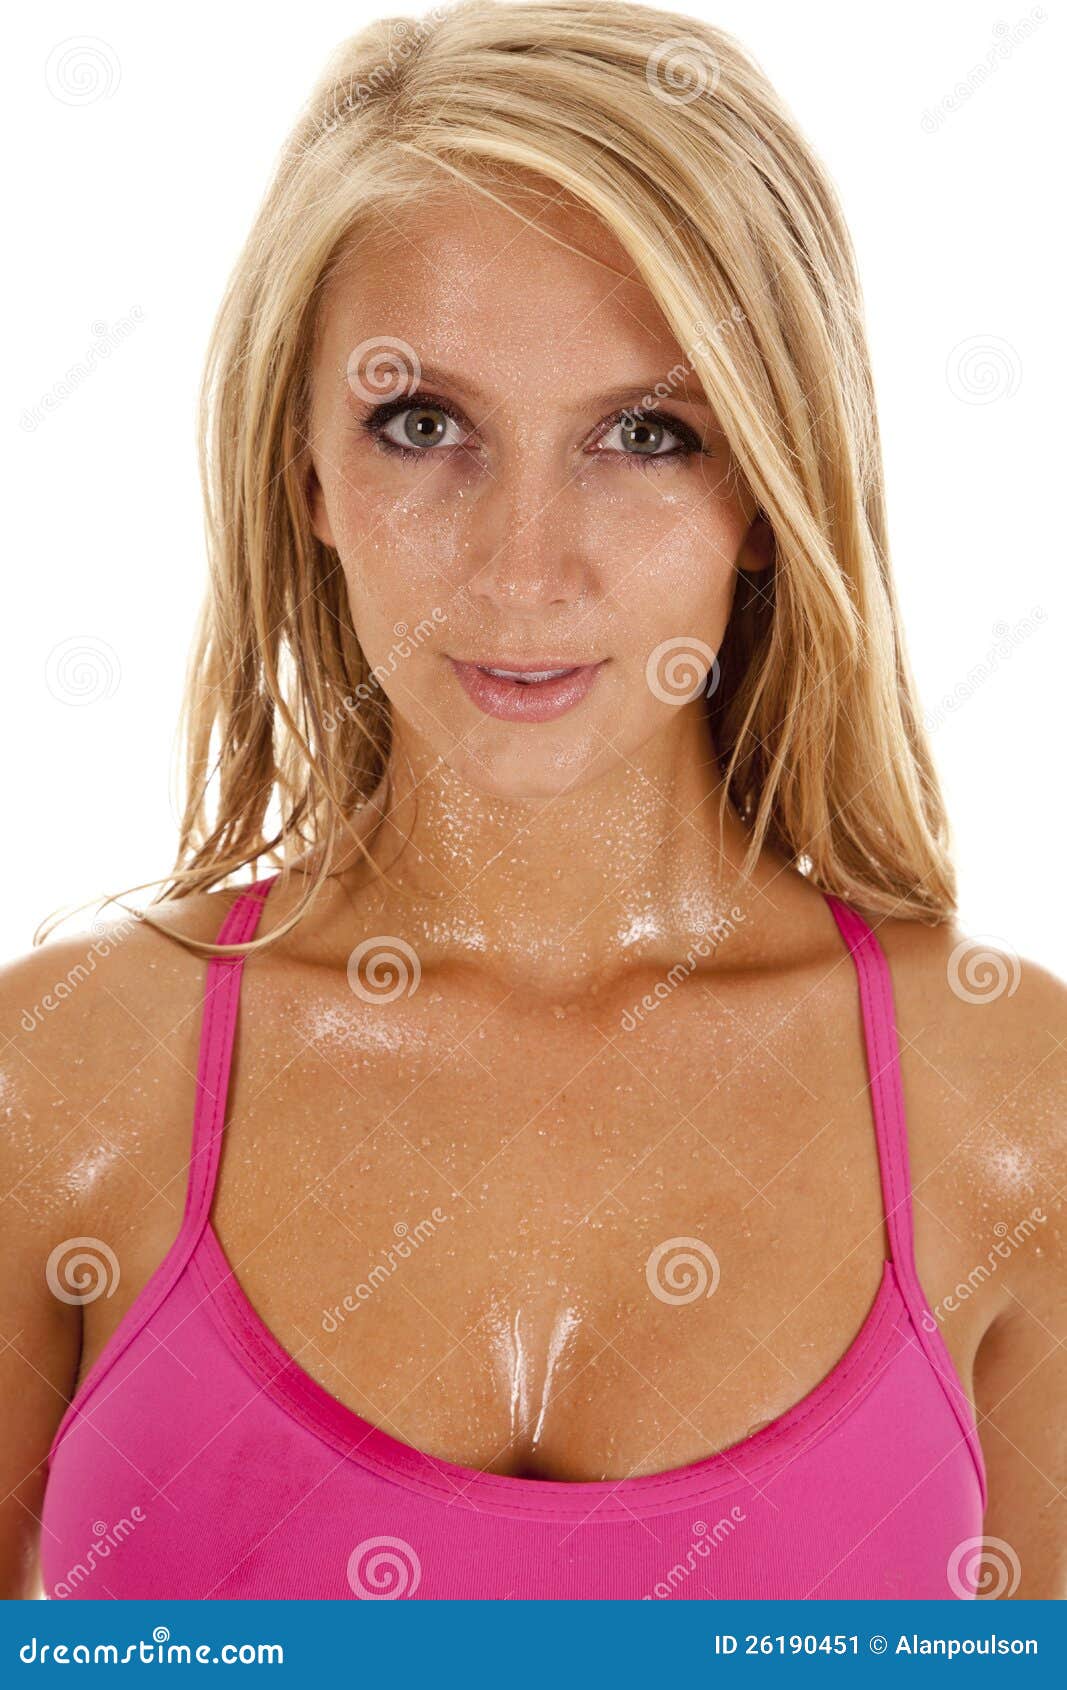 Woman Black Bra Body Close Stomach Shiny Stock Photo - Image of caucasian,  skin: 47515526